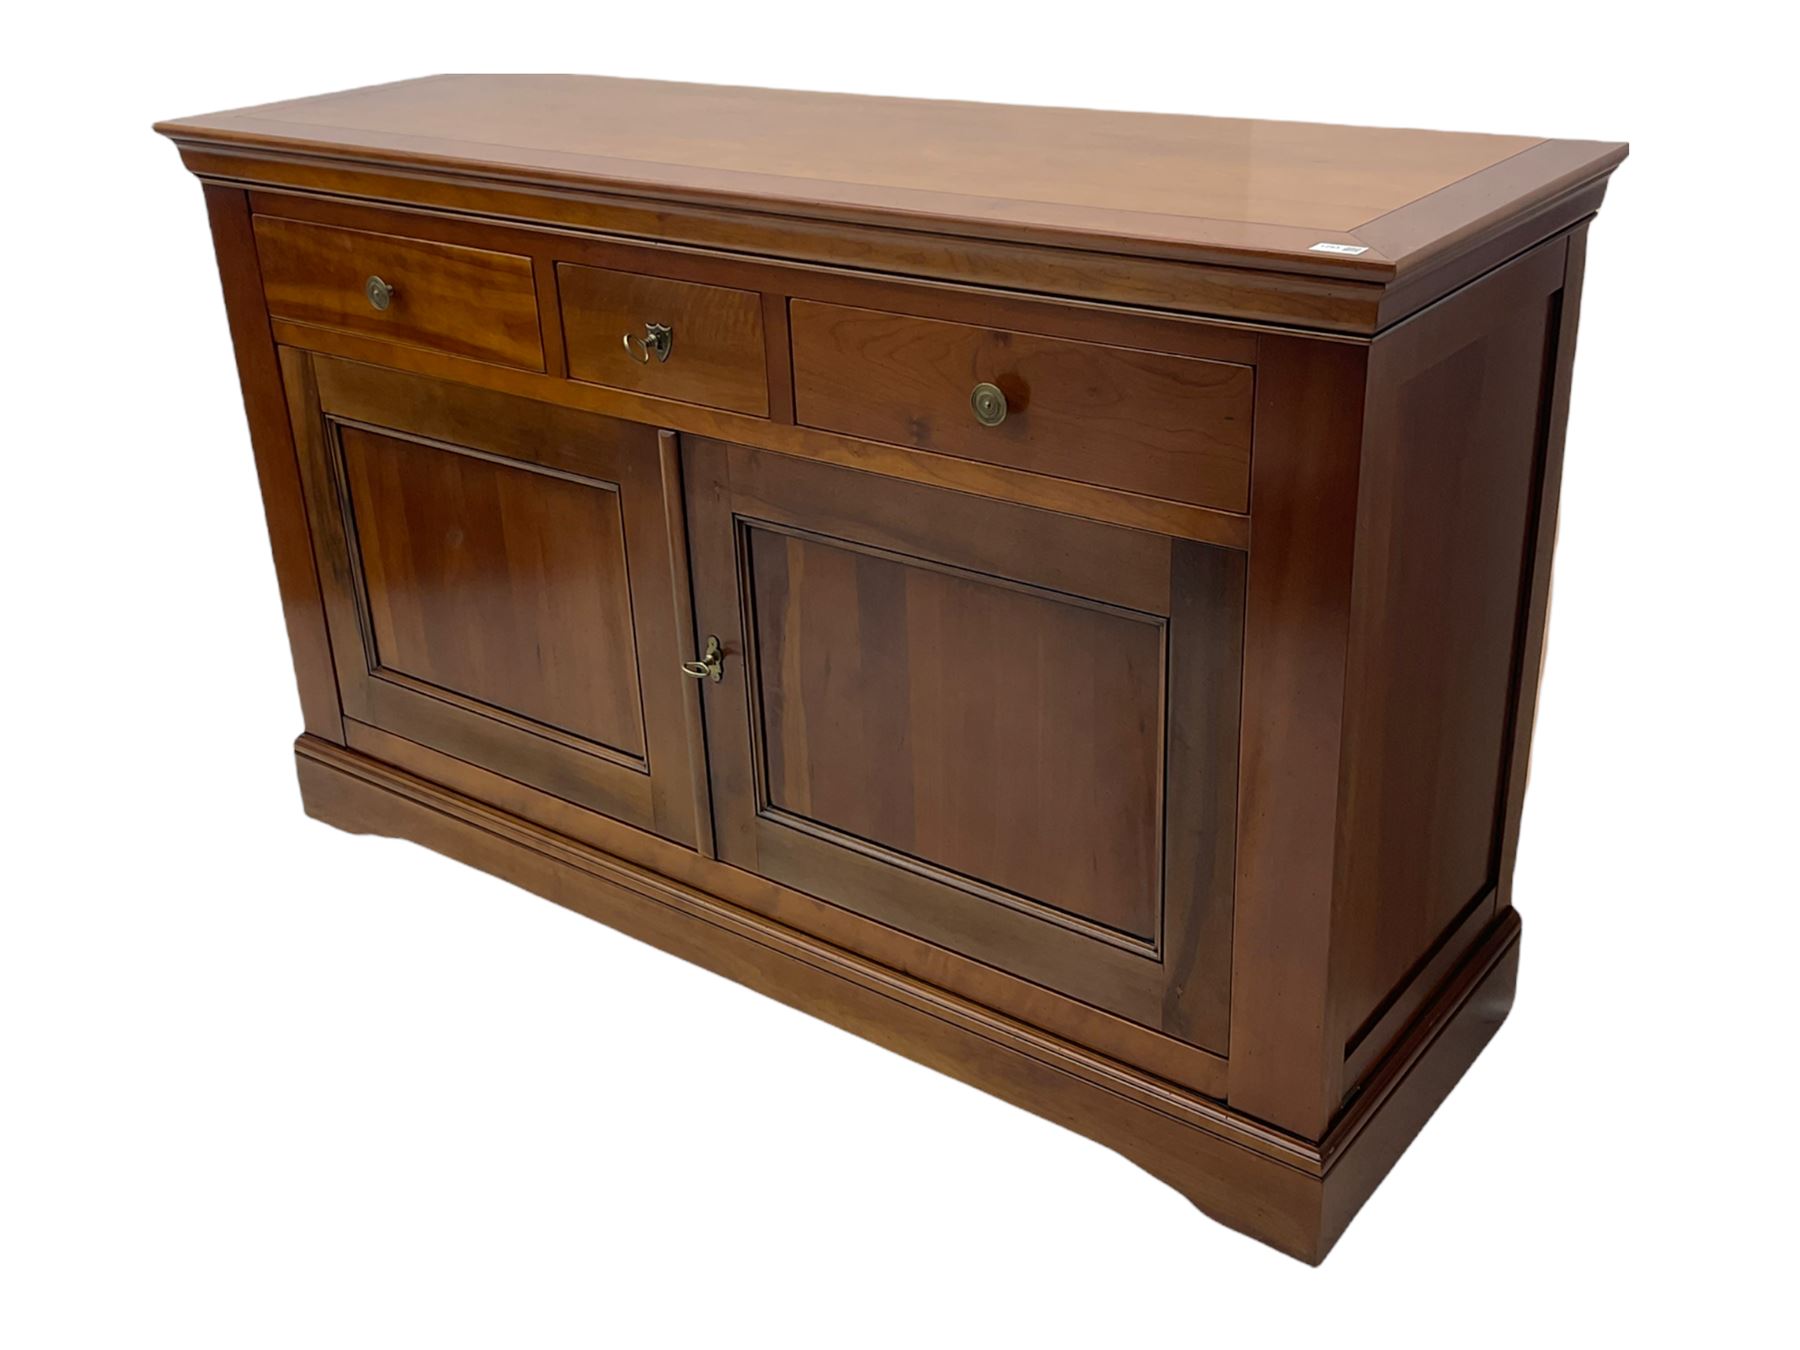 Grange Furniture cherry wood sideboard - Image 3 of 8